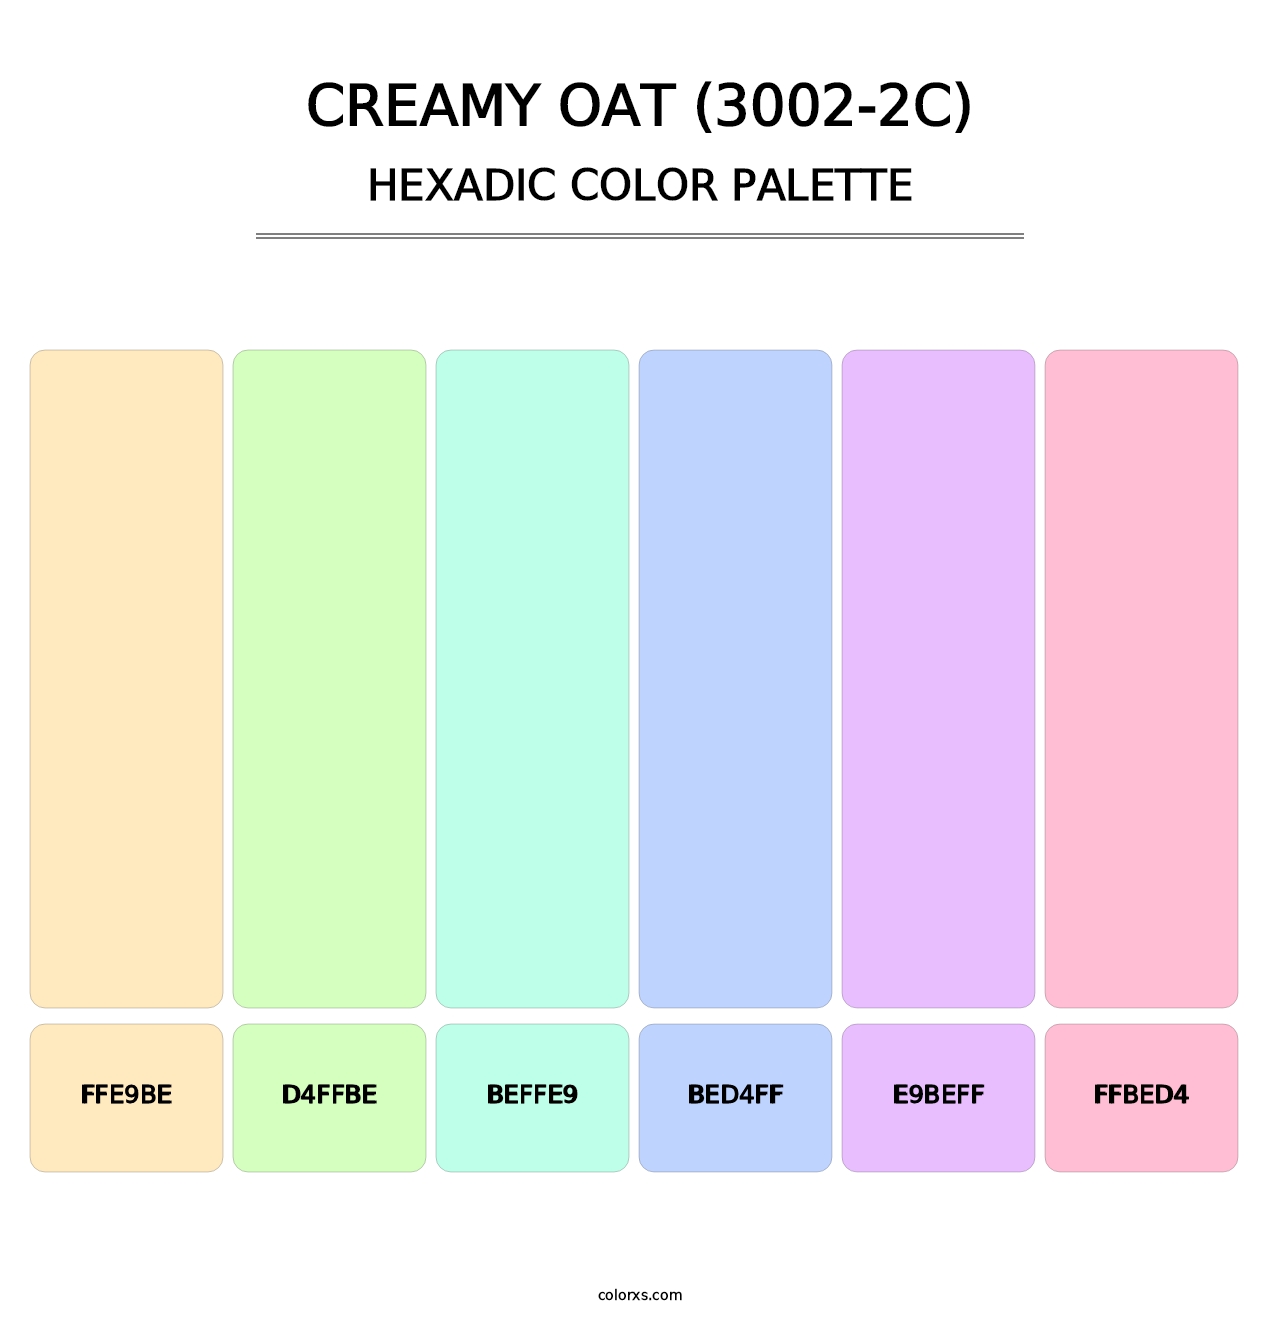 Creamy Oat (3002-2C) - Hexadic Color Palette